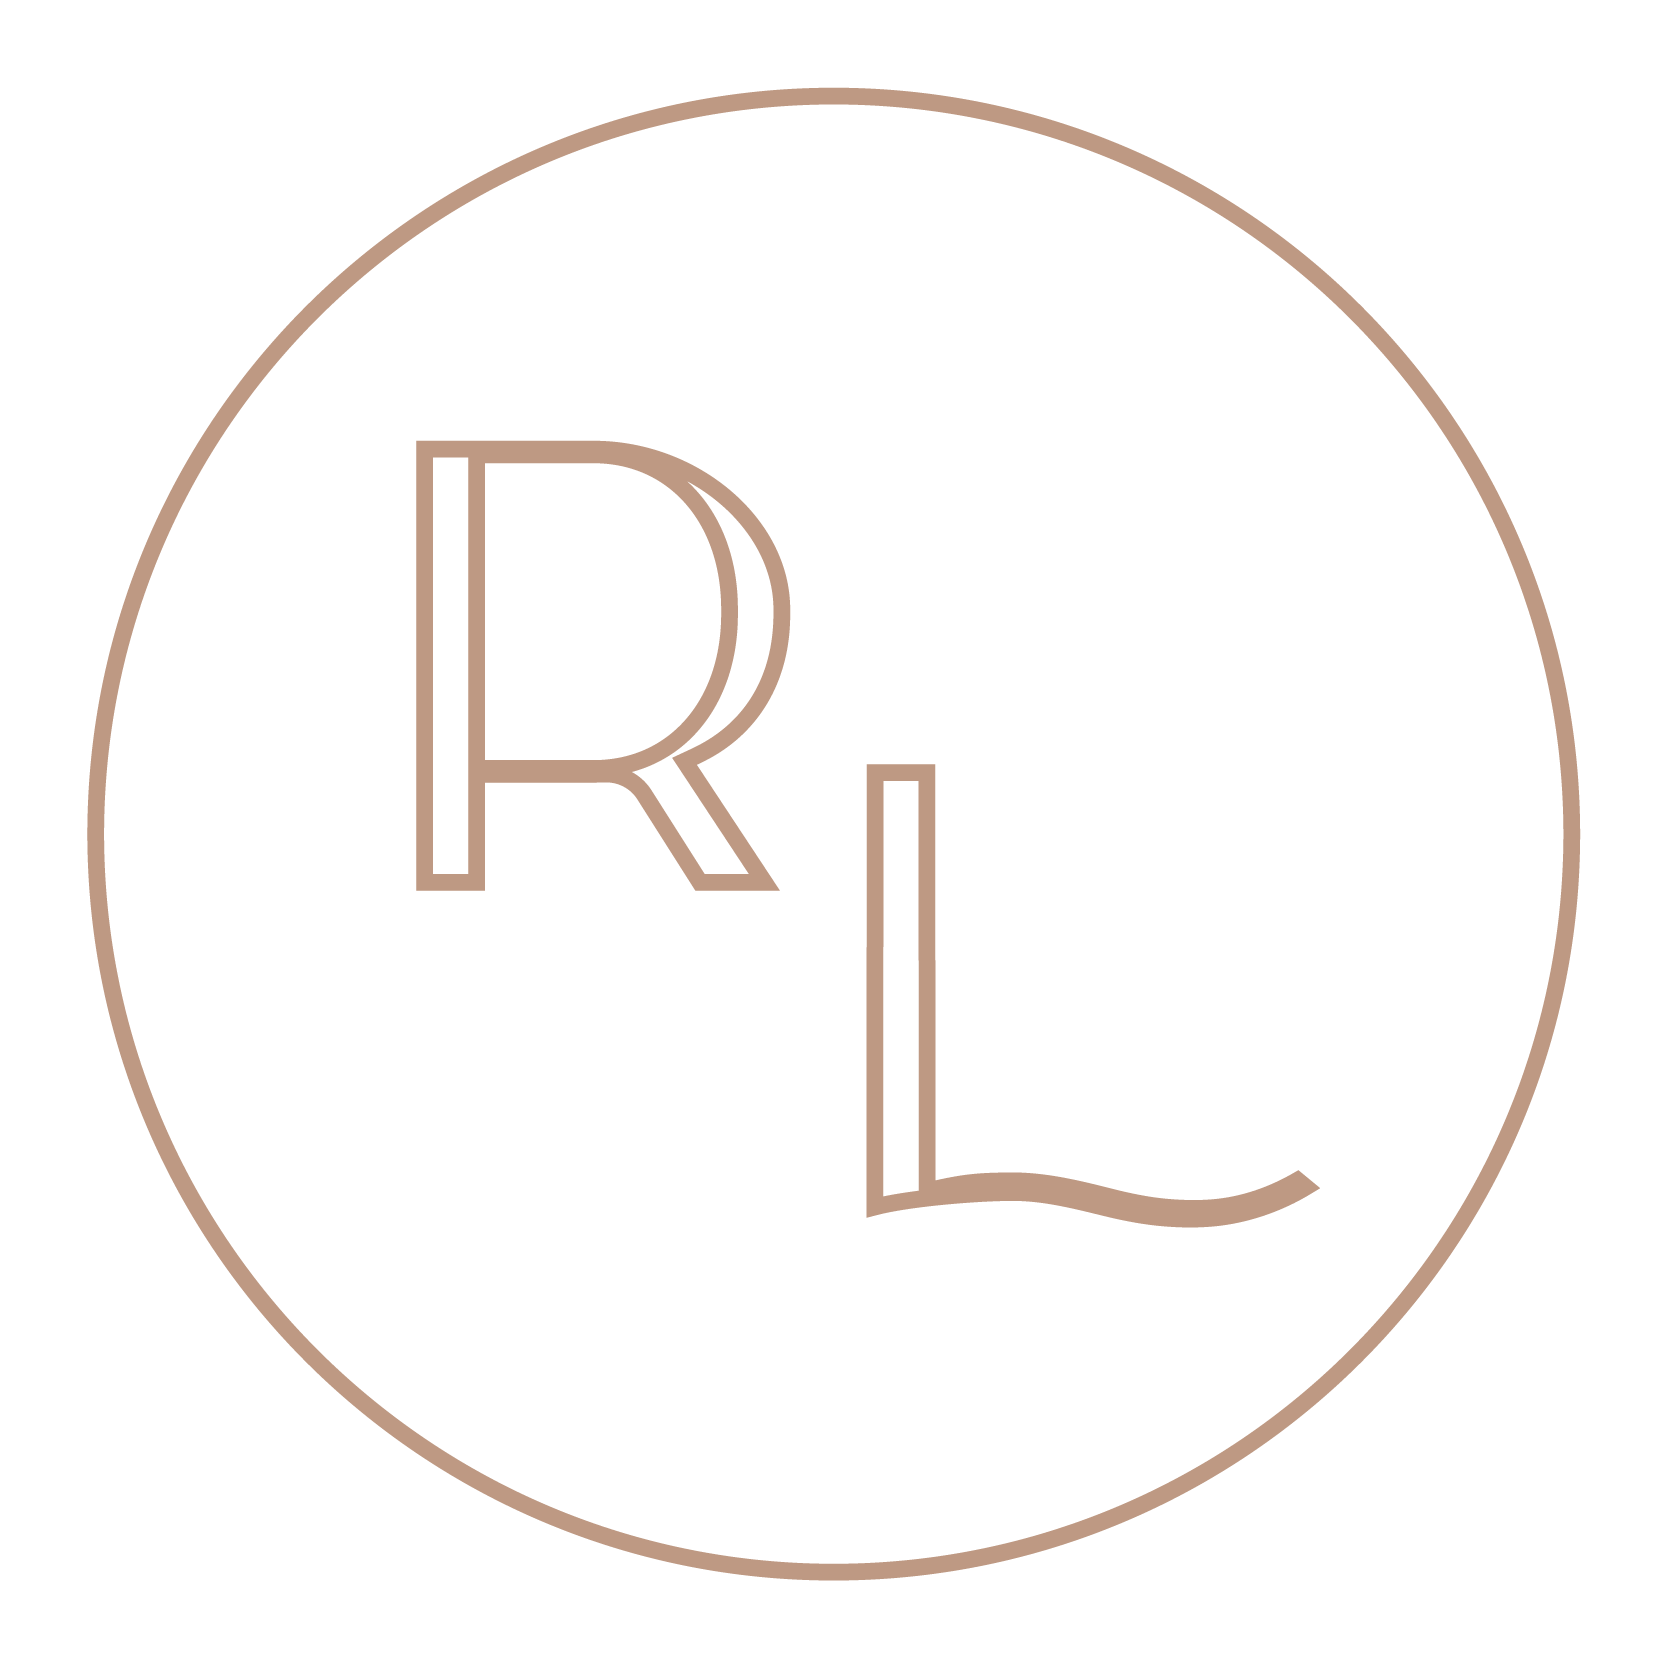 Rio Lane Designs — Avery Made